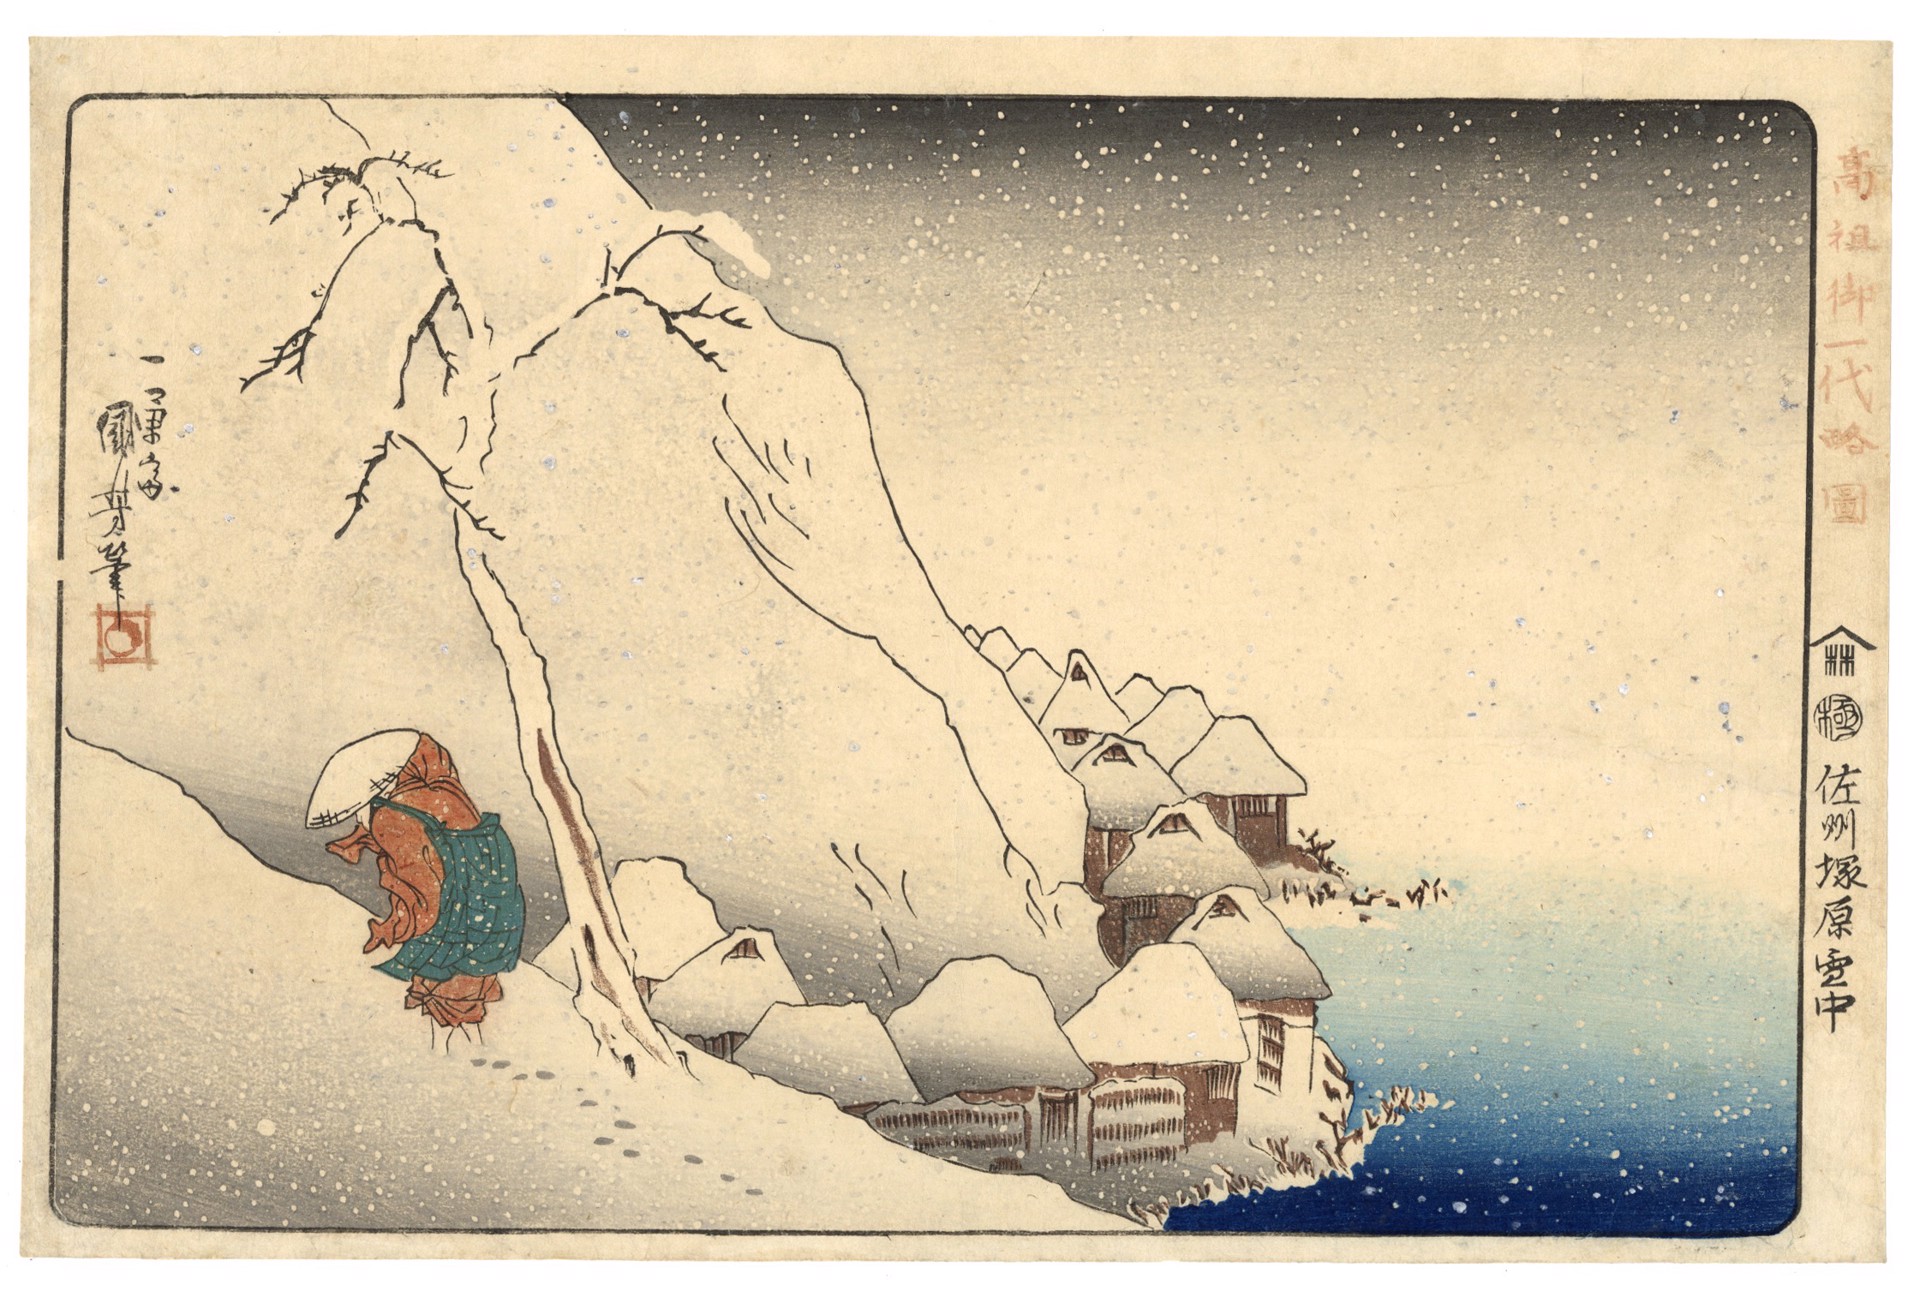 In the Snow at Tsukahara, Sado Island by Kuniyoshi